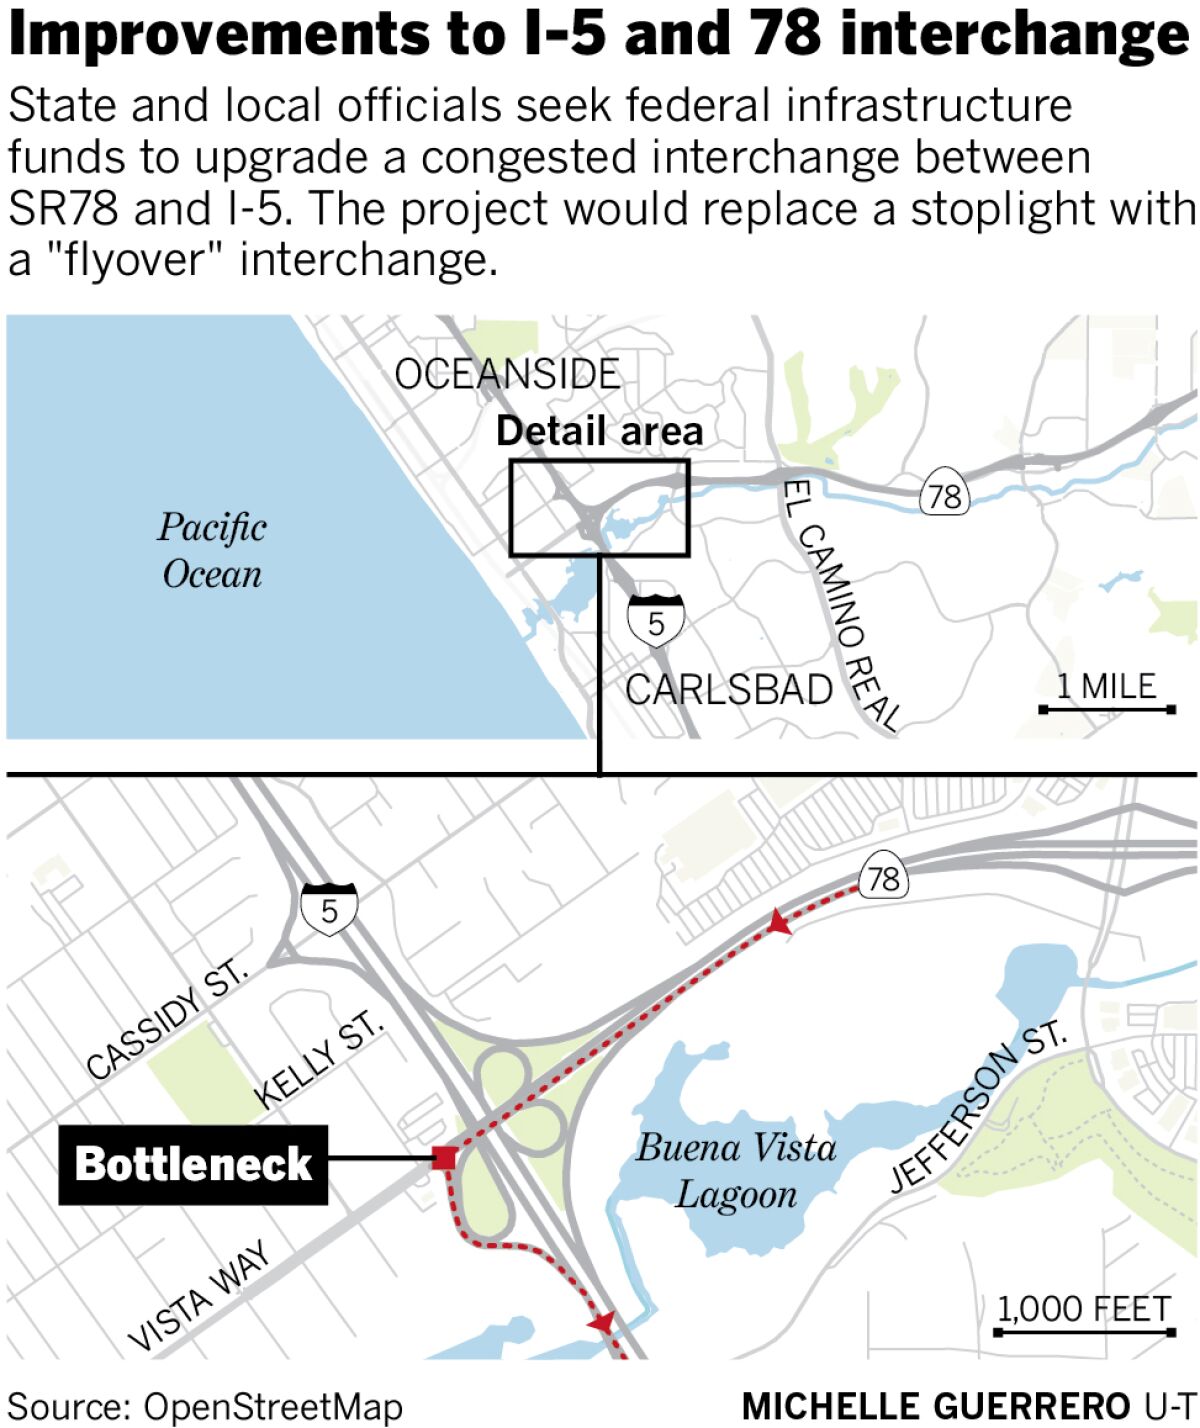 Improvements to I-5 and 78 interchange